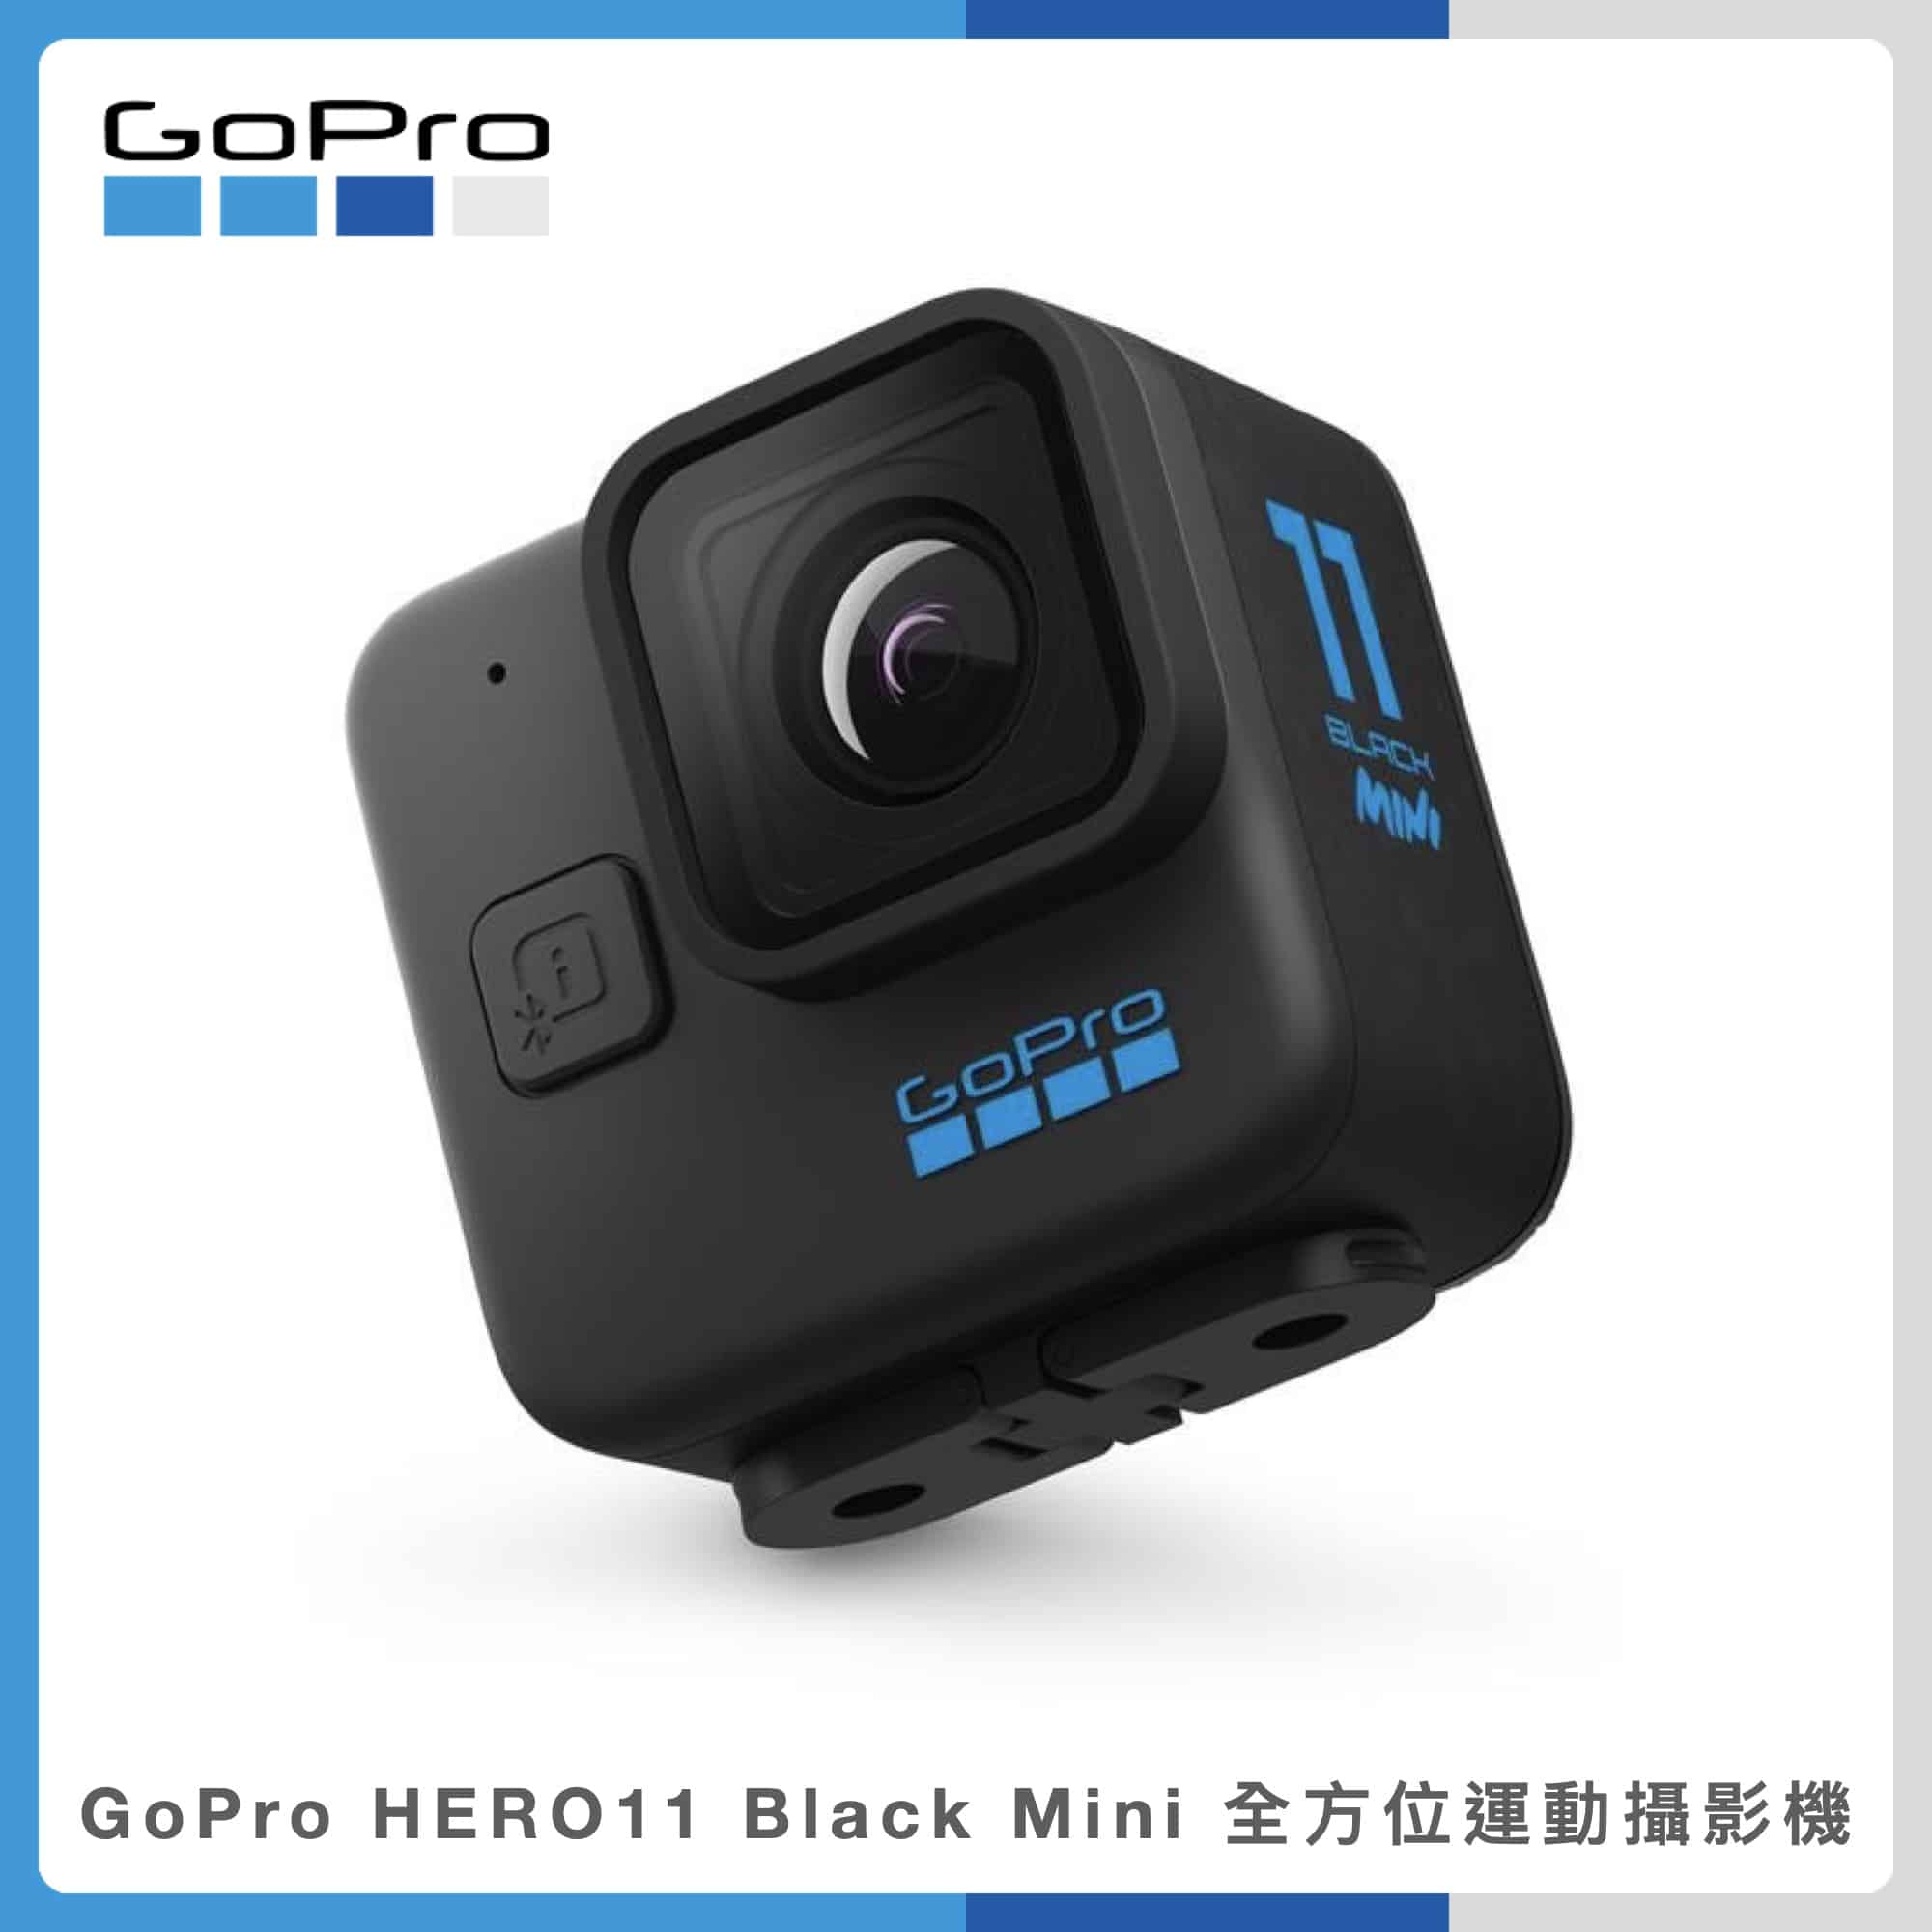 GoPro Hero11 Black Mini 全方位運動攝影機 (台灣公司貨) GOPRO11MINI